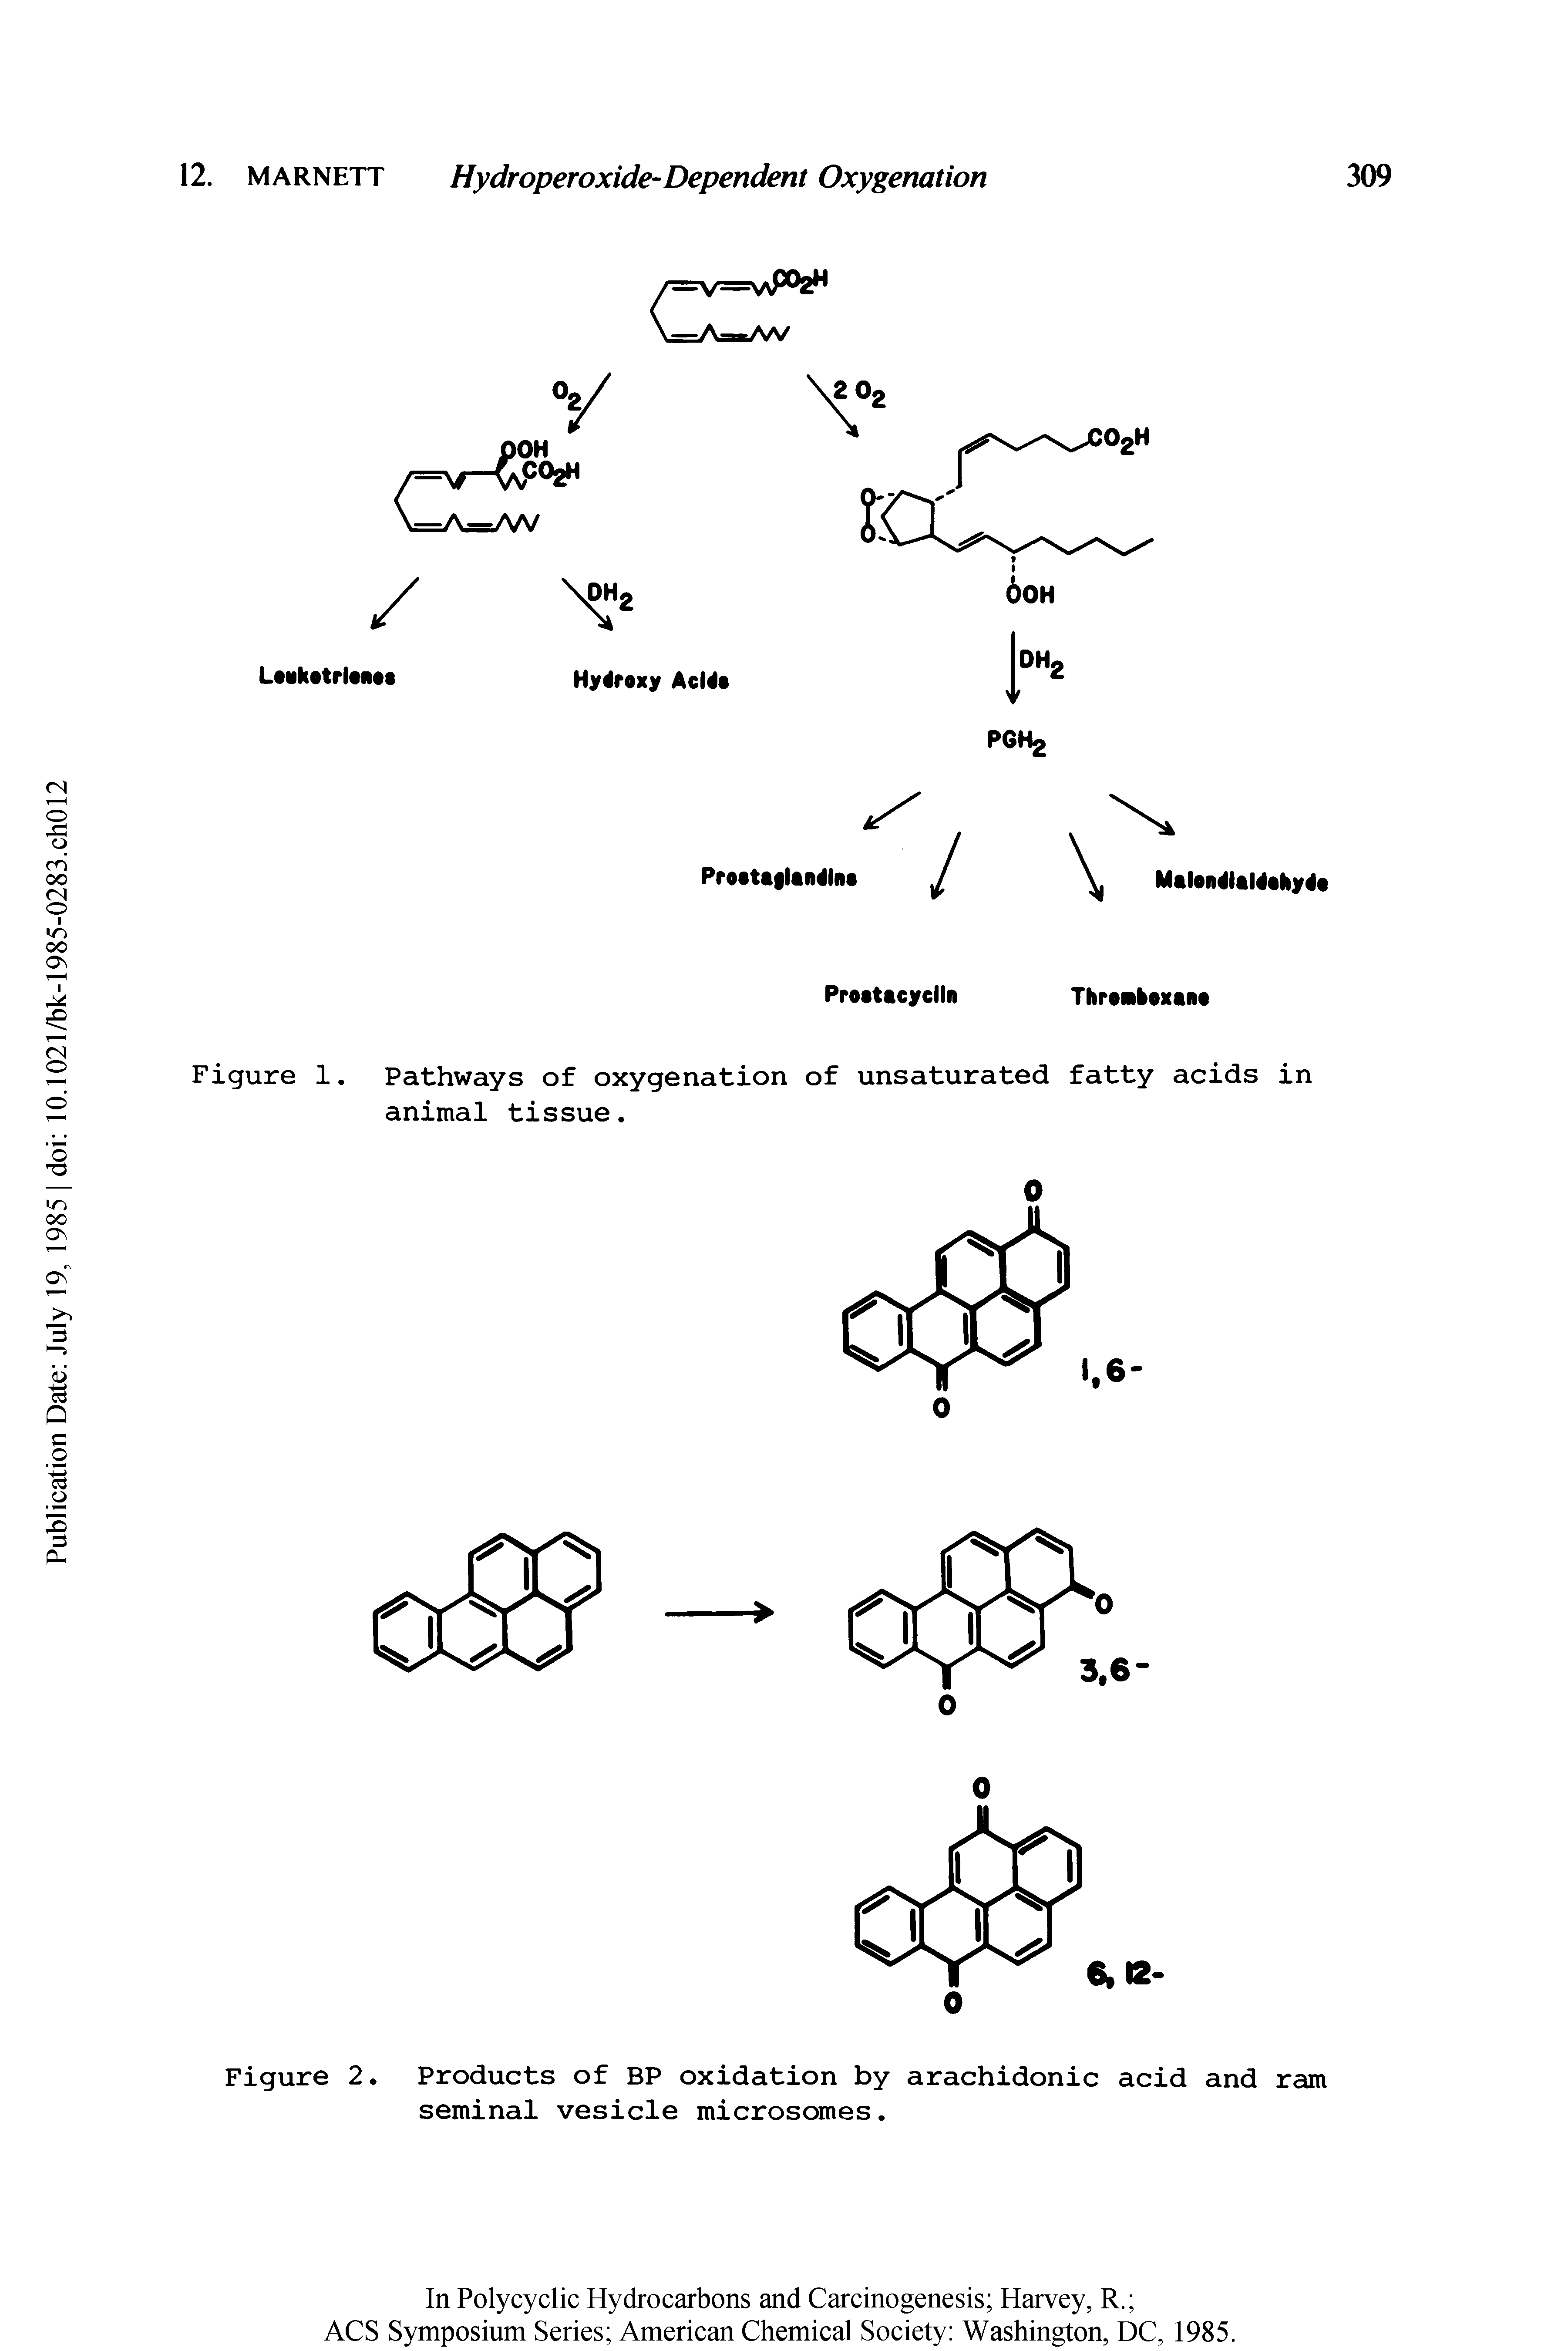 Figure 2. Products of BP oxidation by arachidonic acid and ram seminal vesicle microsomes.